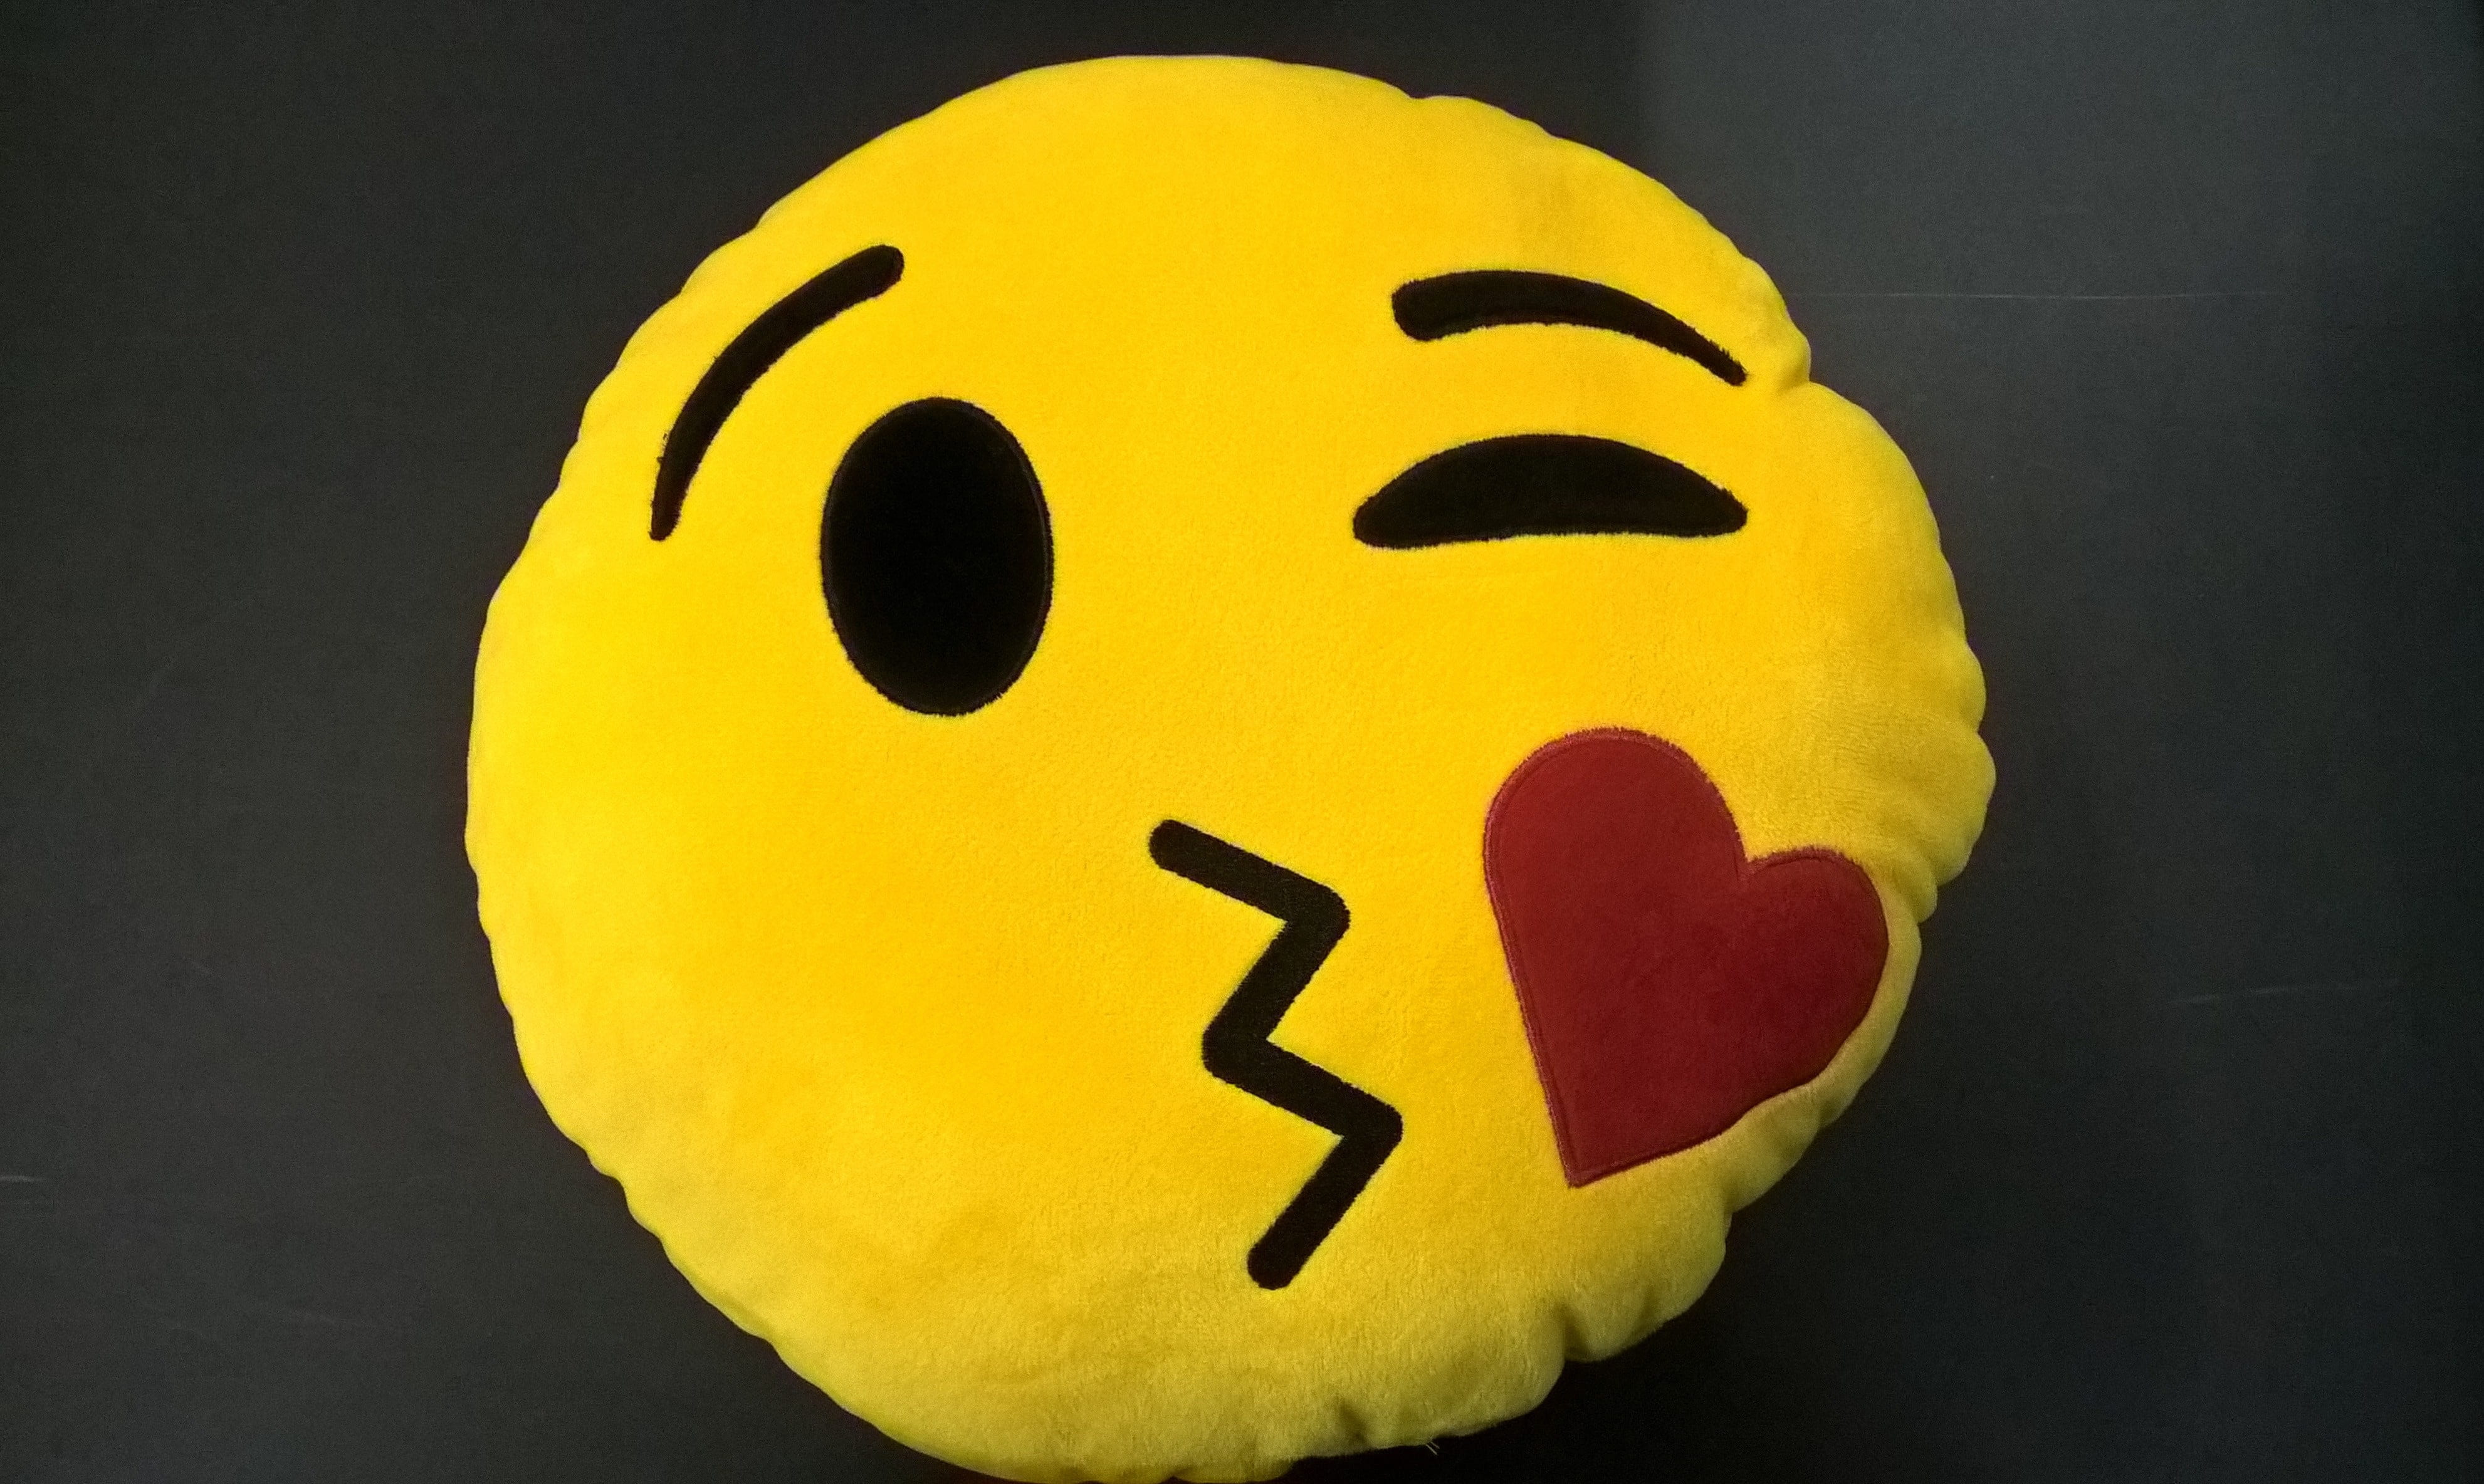 emoji, emojis, emoticon, kiss, heart, my dear, yellow, anthropomorphic smiley face